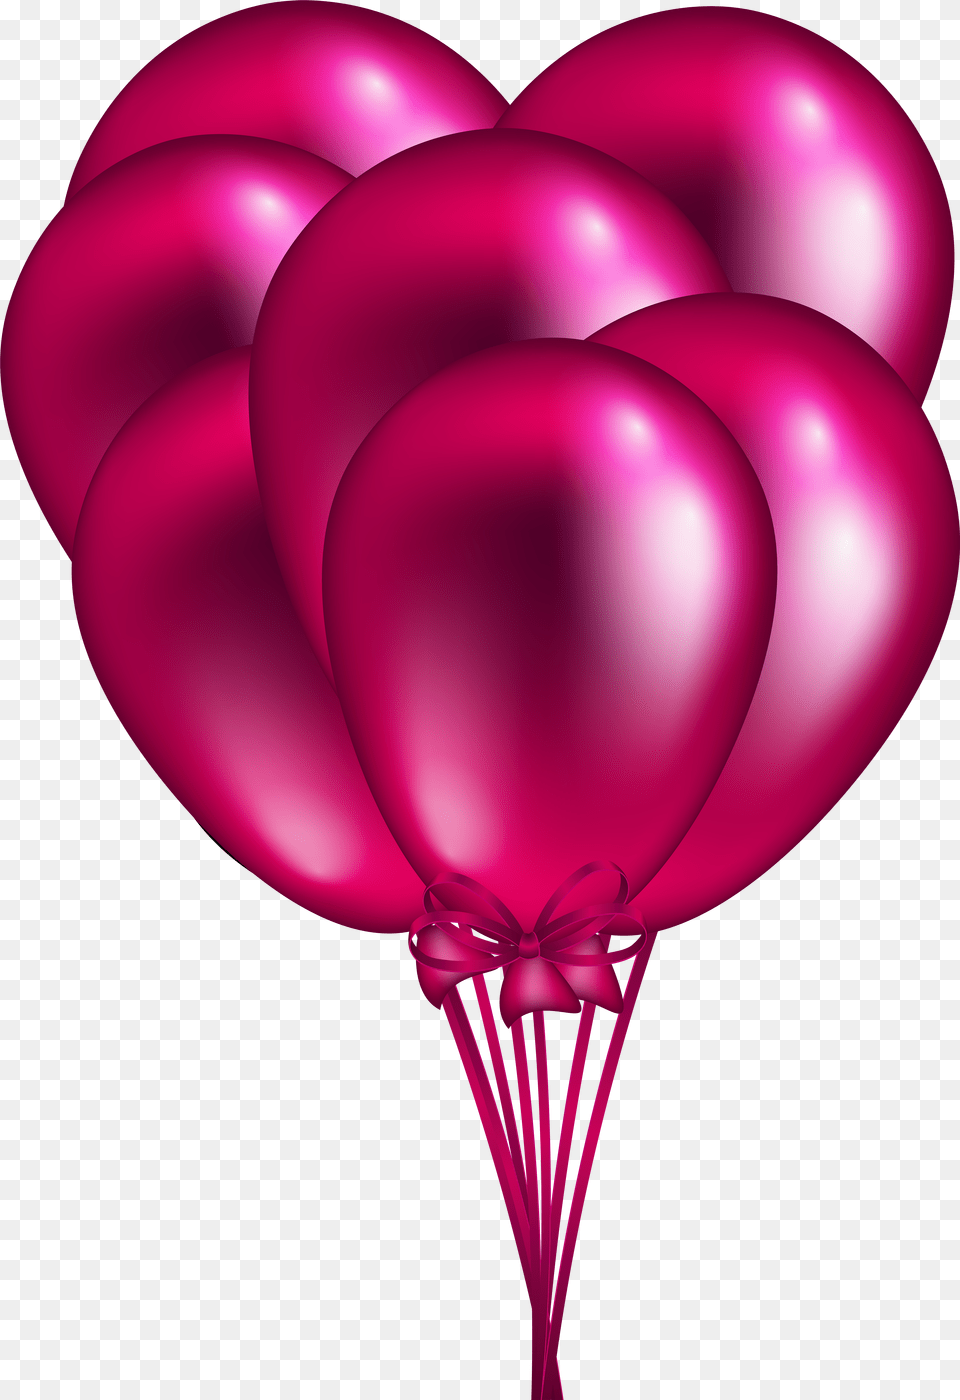 Download Hd Pink Balloon Bunch Clip Dark Pink Balloons Free Transparent Png